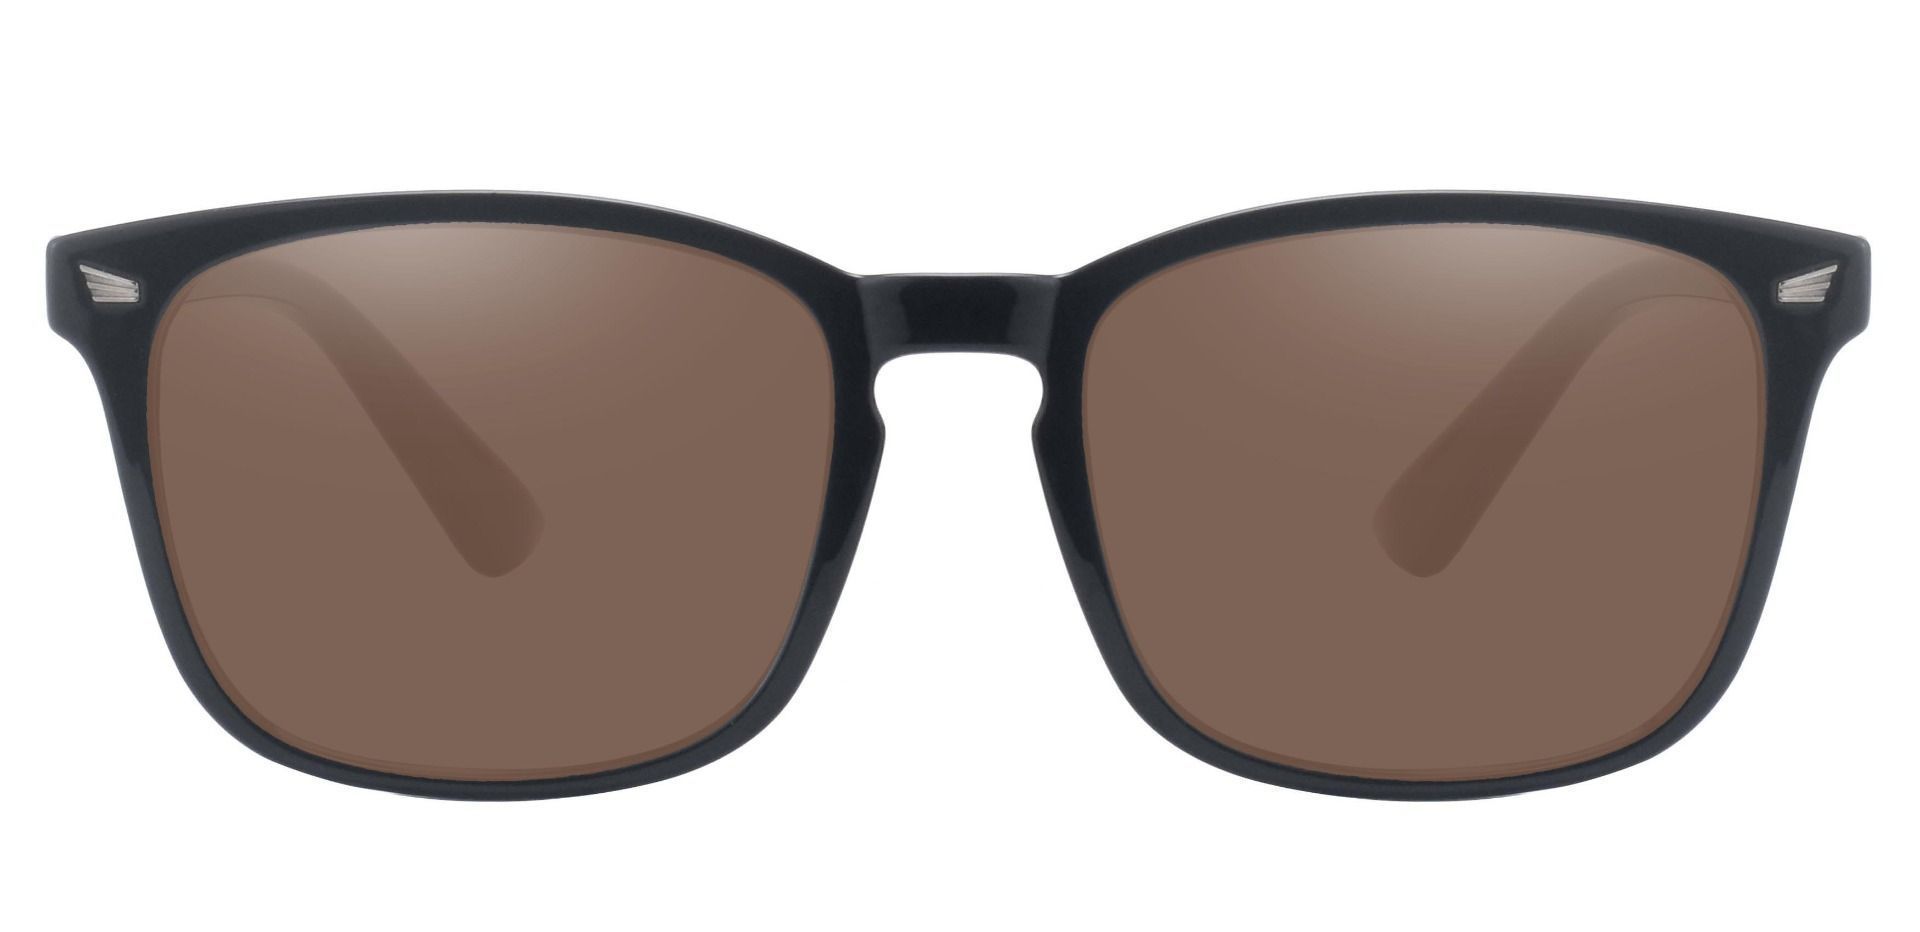 Rogan Square Prescription Sunglasses - Black Frame With Brown Lenses